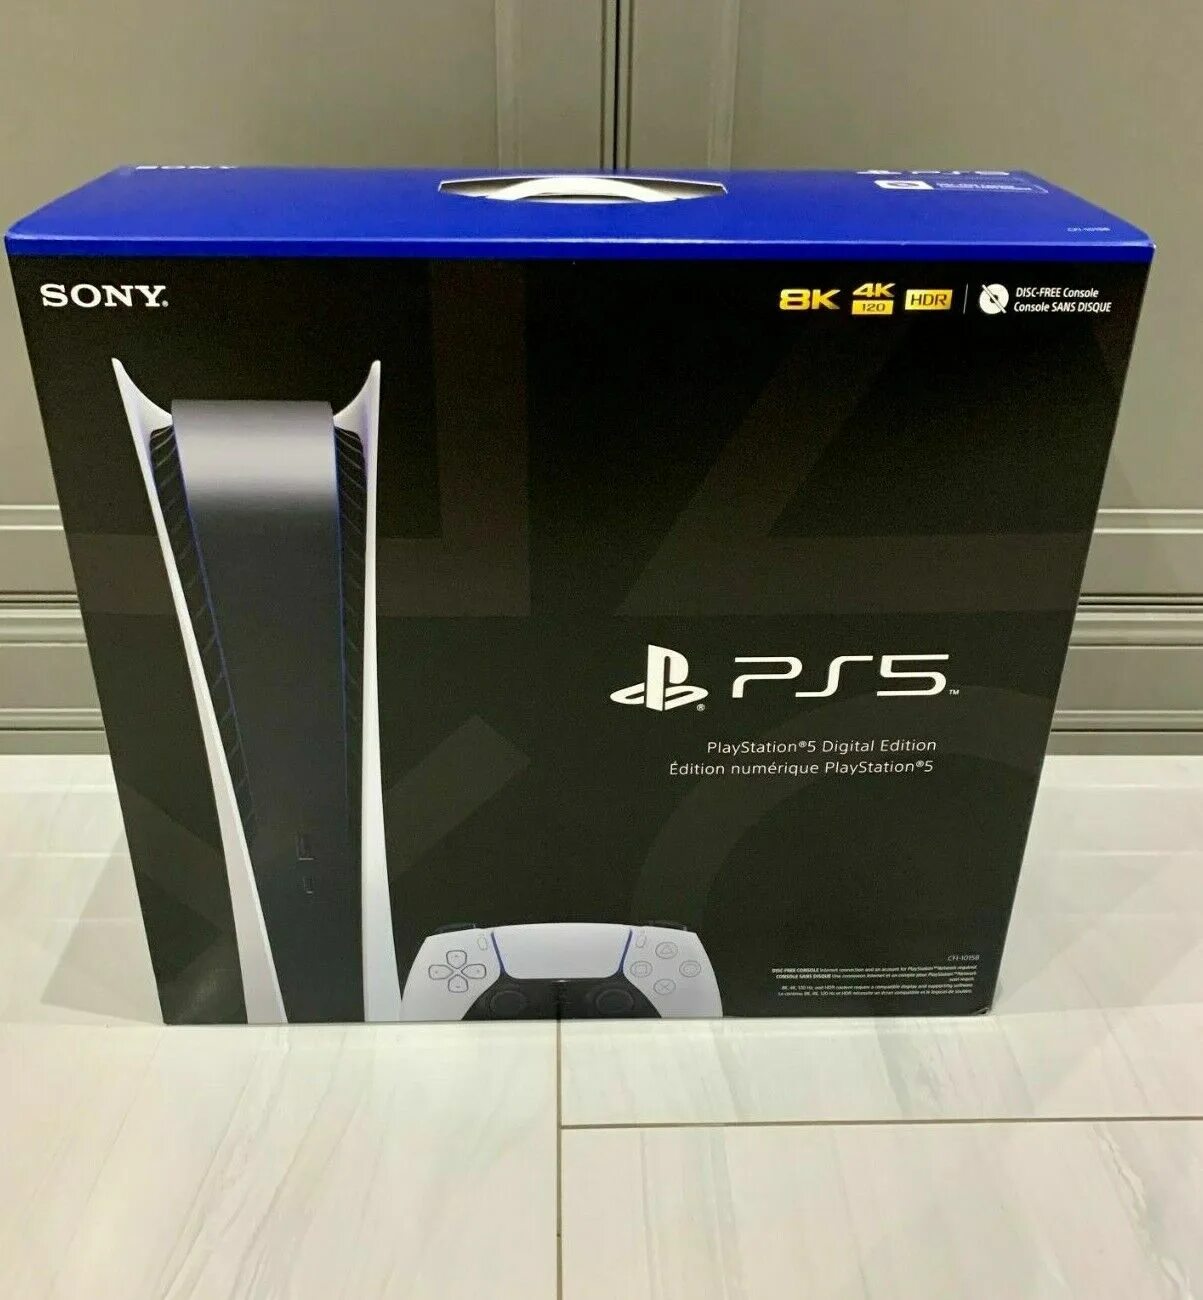 Playstation 5 slim cfi 2000. Sony PLAYSTATION ps5 Digital Edition. Ps5 Digital Edition коробка. Sony PLAYSTATION 5 Digital Edition 825gb. PLAYSTATION 5 консоль ps5 Digital Edition.